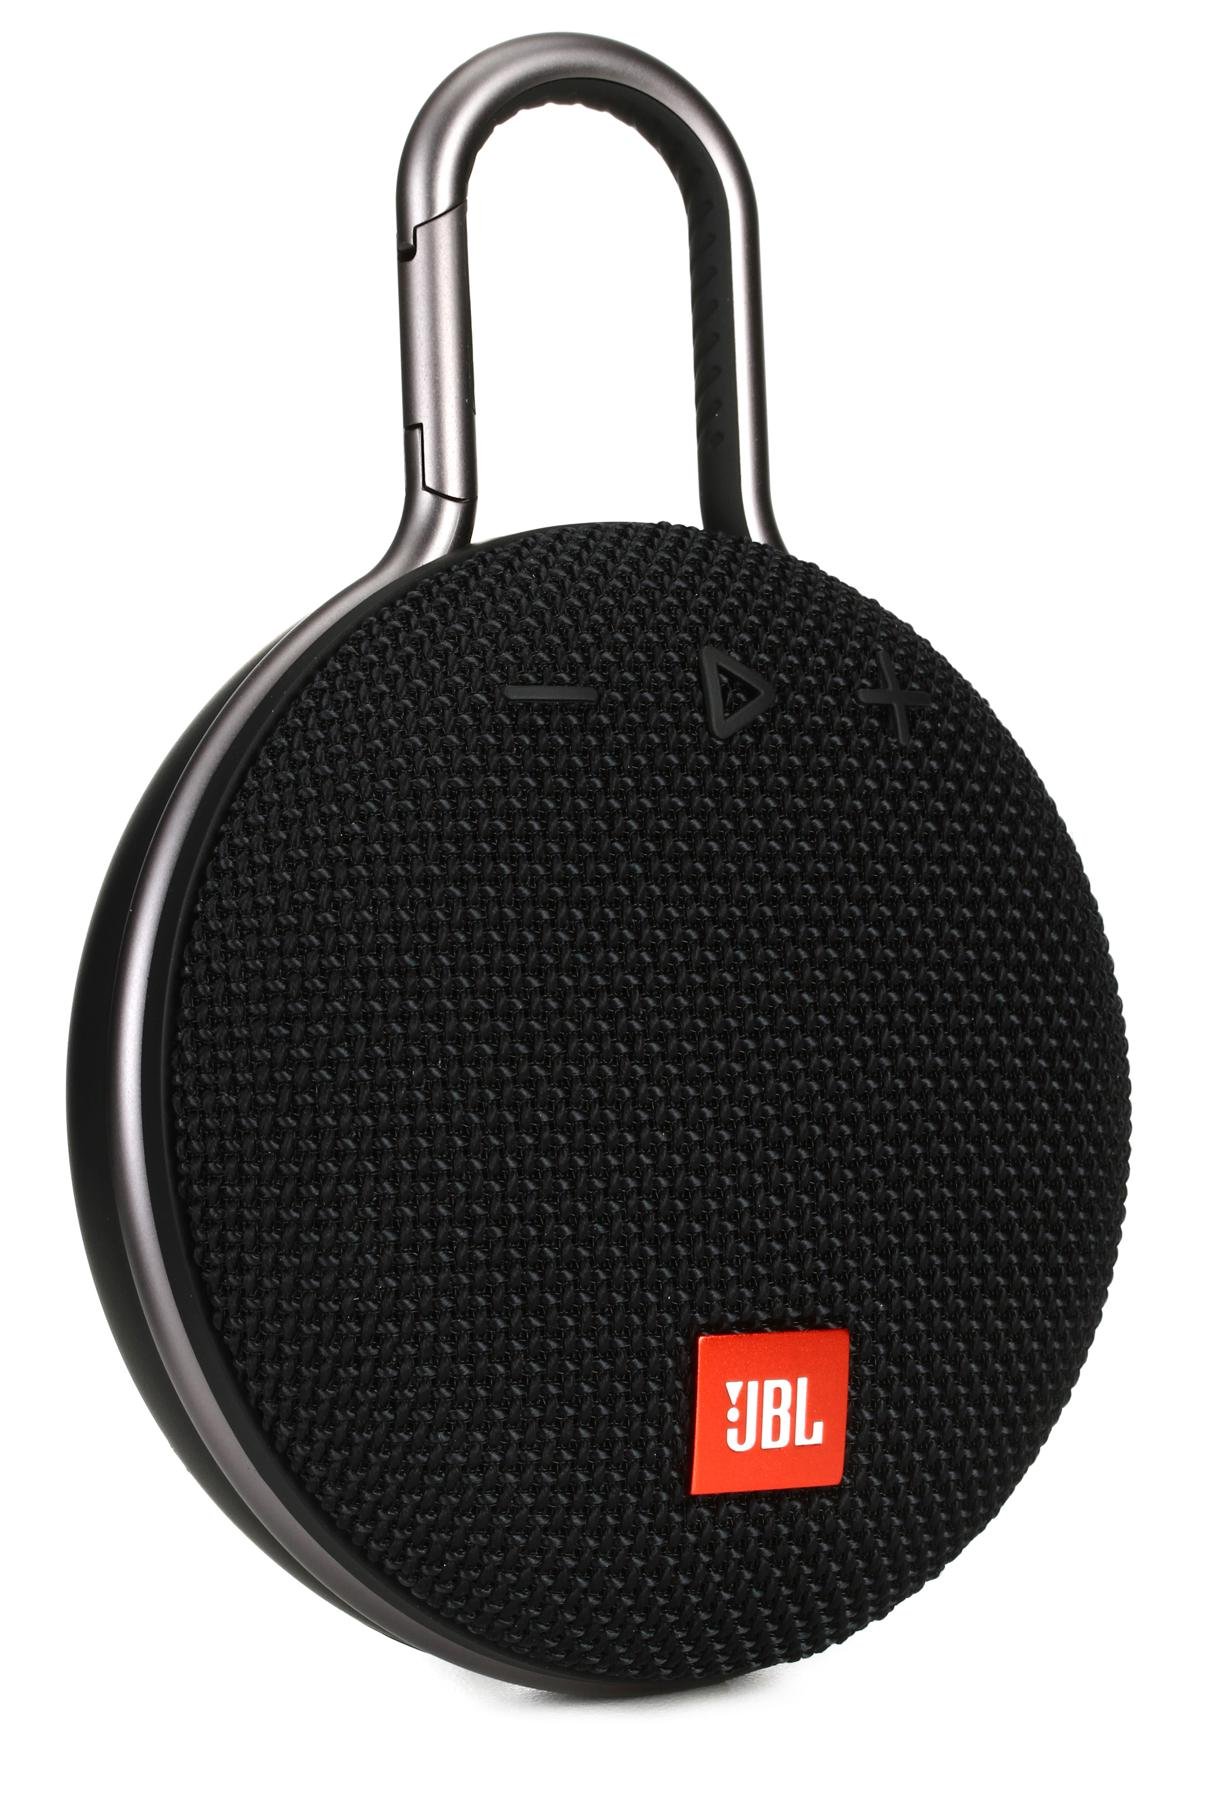 jbl clip 3 wireless speaker